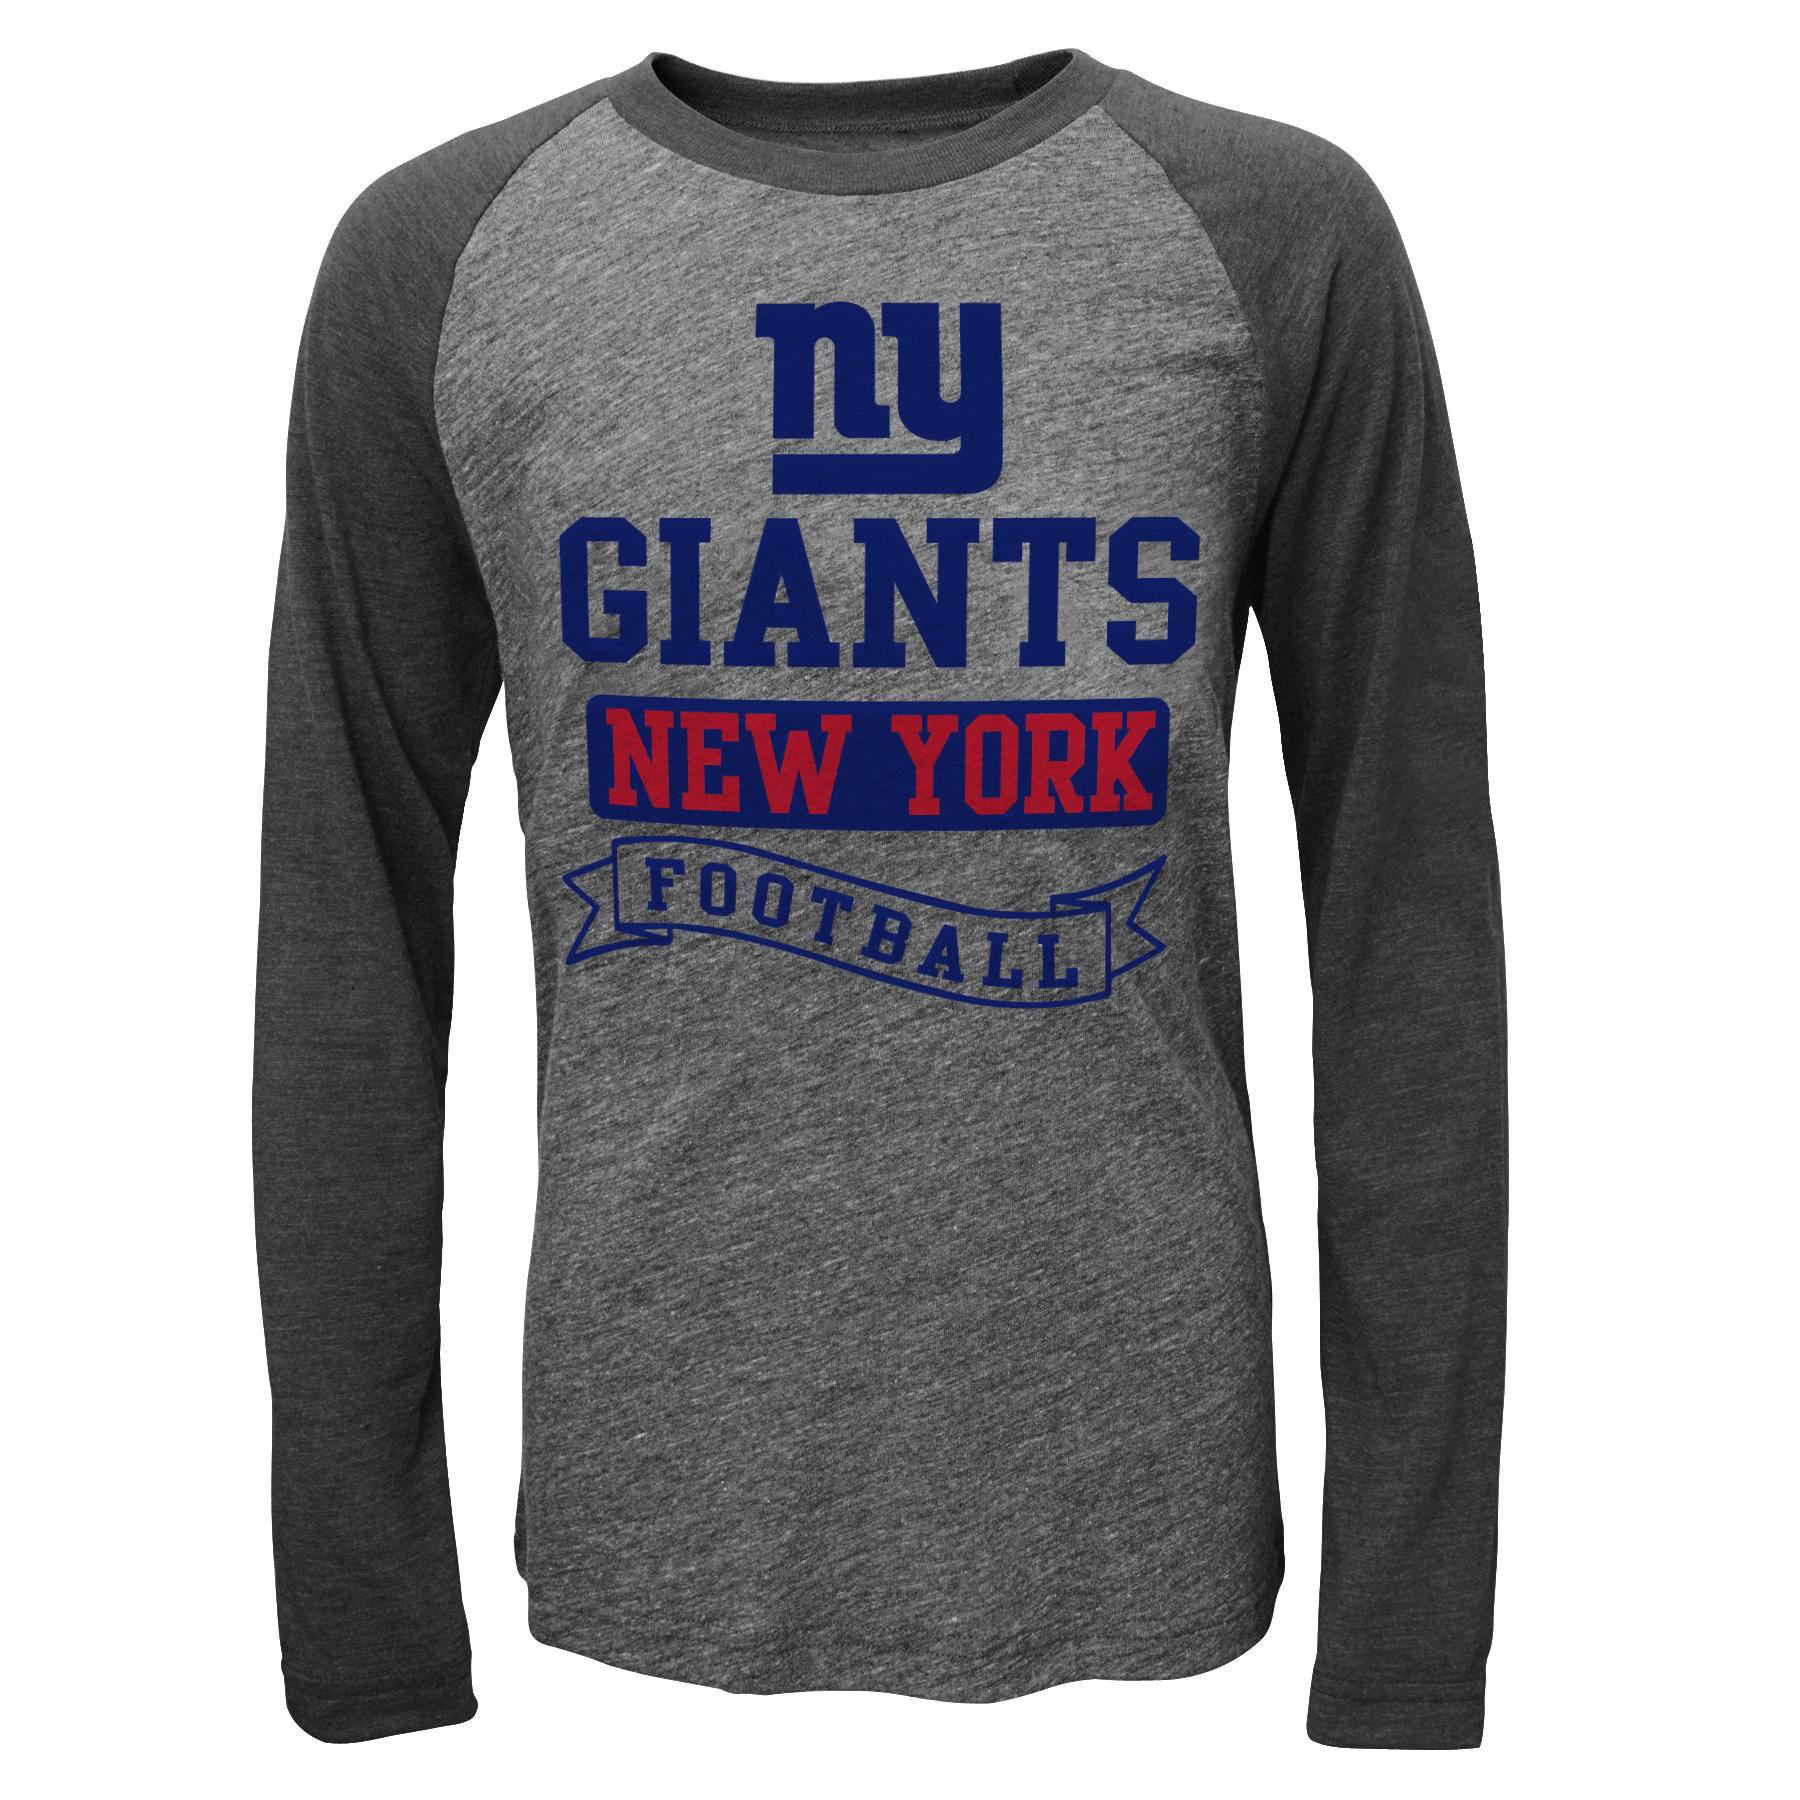 NFL Boys' Raglan T-Shirt - New York Giants